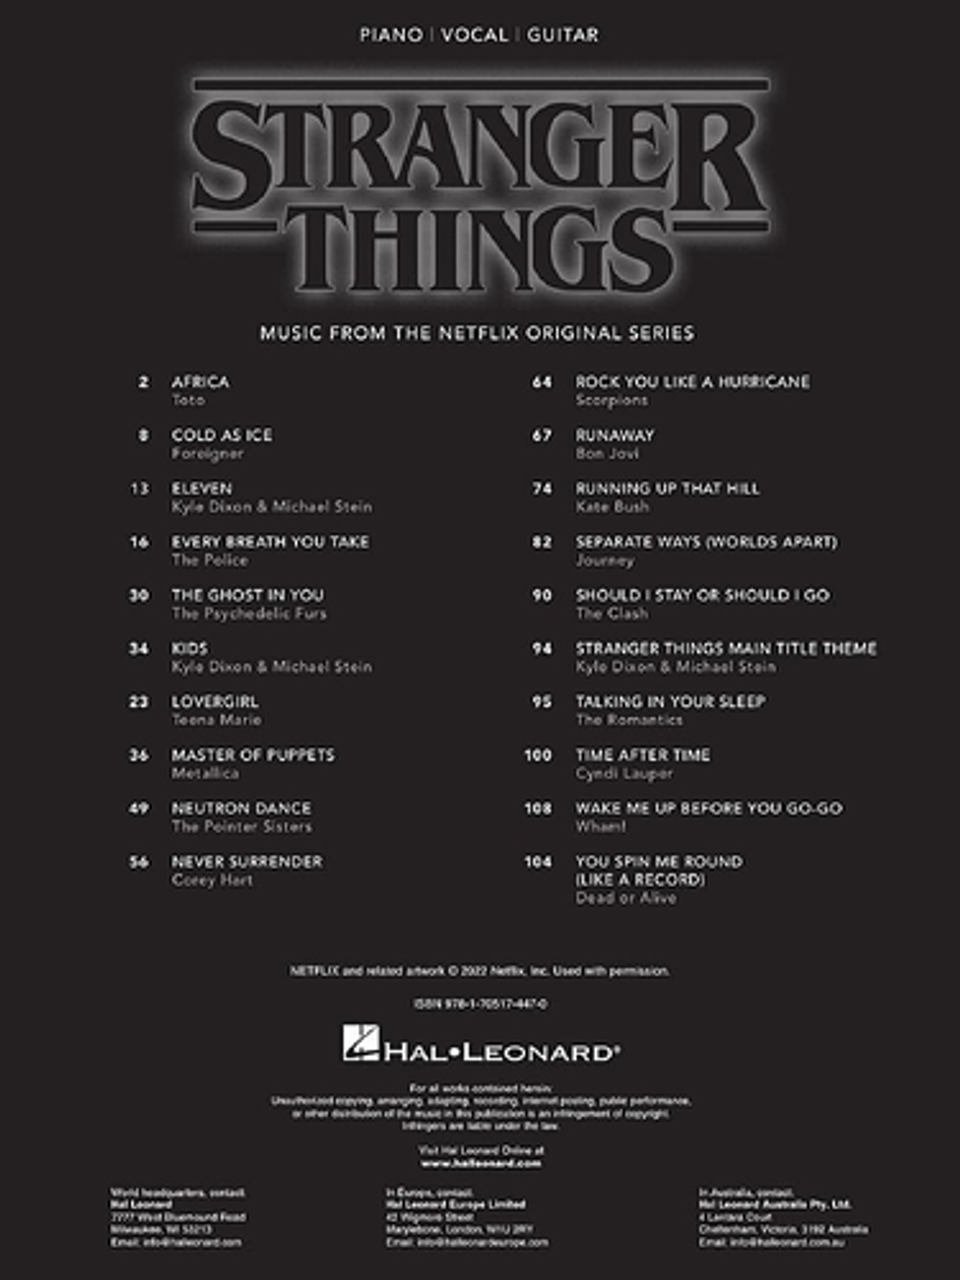 Hal Leonard - Stranger Things Songbook